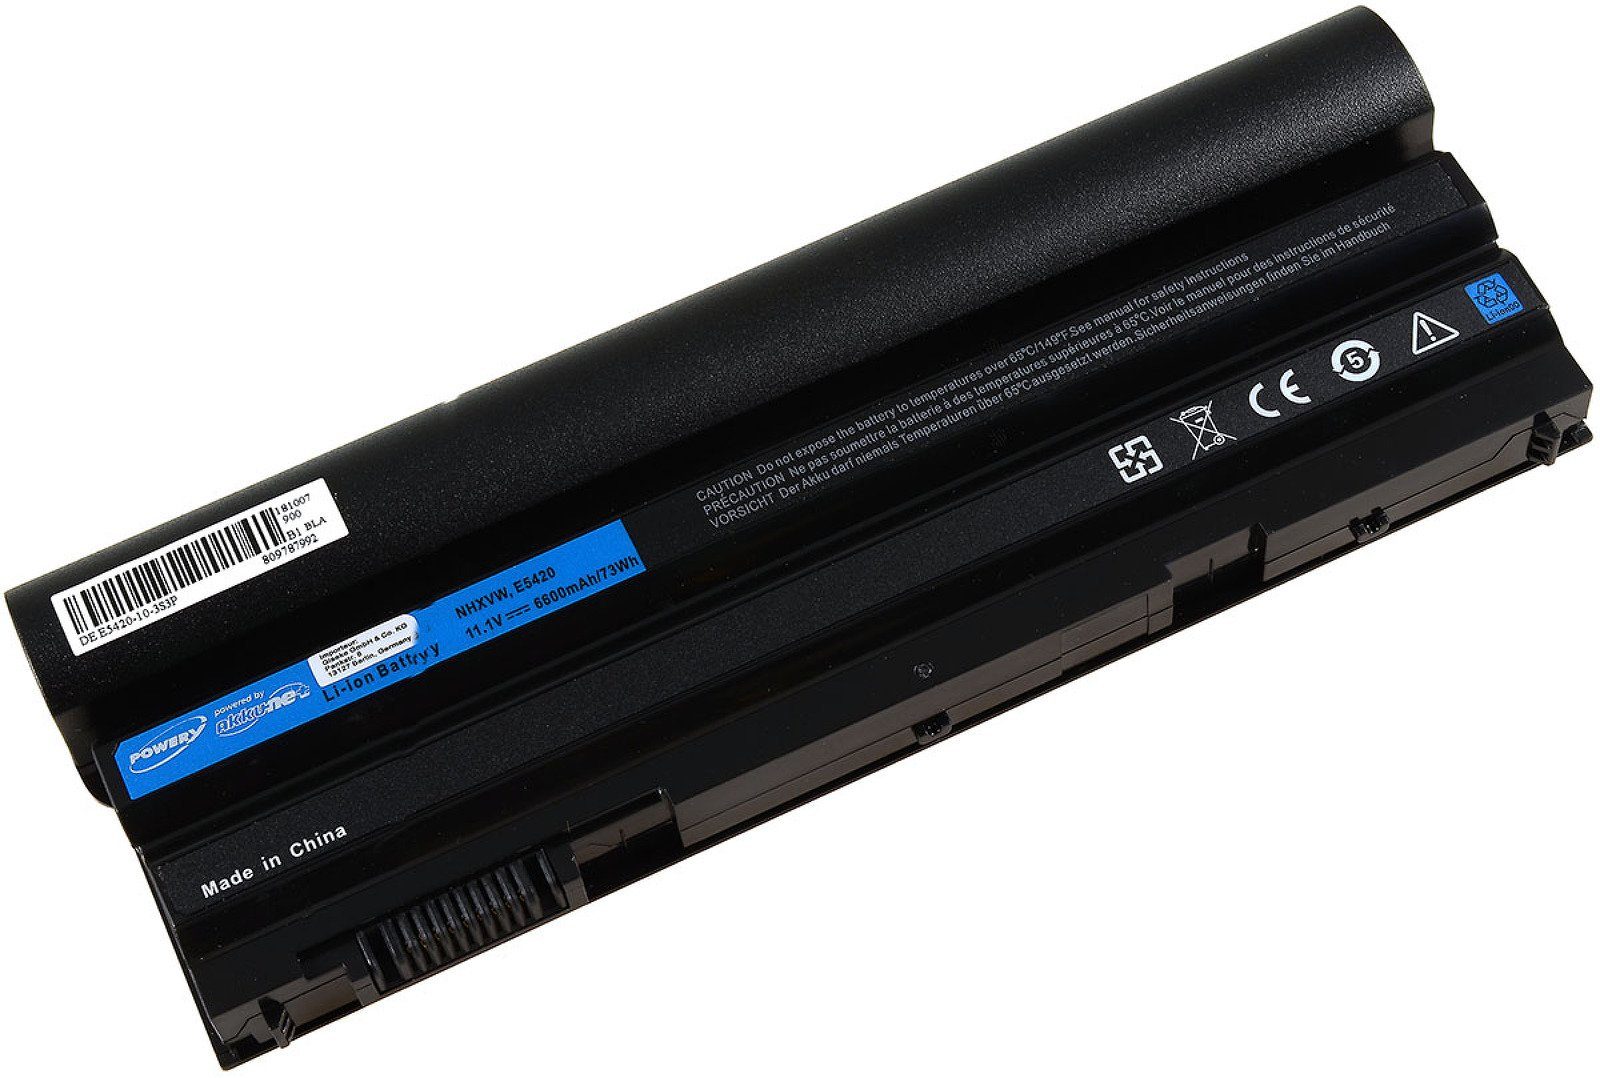 Powery Powerakku für Dell Latitude E6520 Laptop-Akku 6600 mAh (11.1 V)